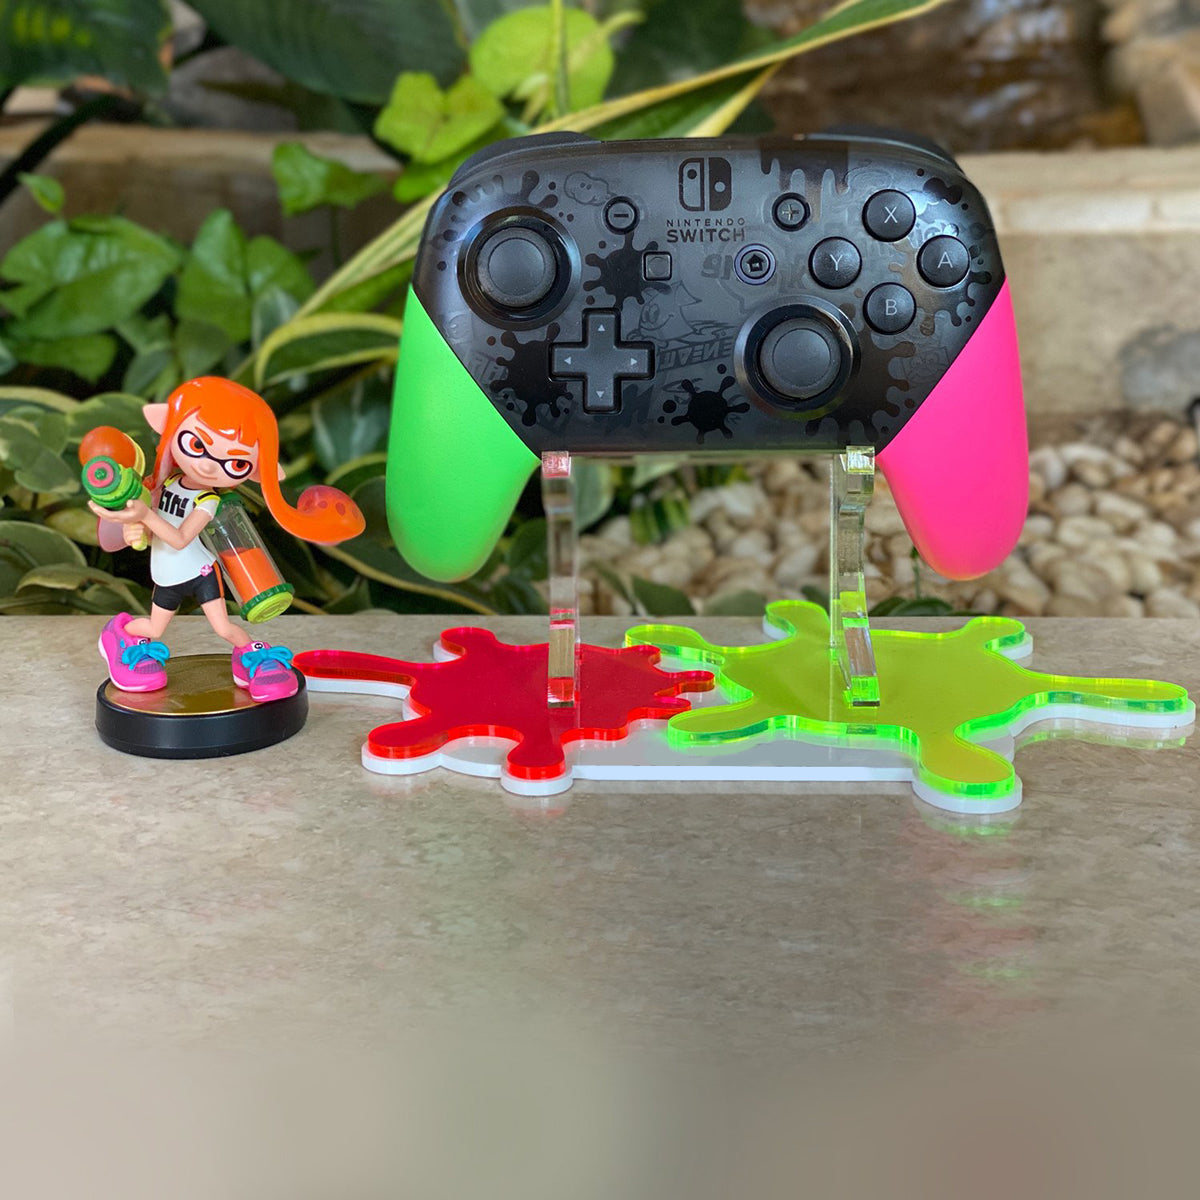 Splatoon 2 Nintendo Switch Pro Controller Display – Rose Colored Gaming